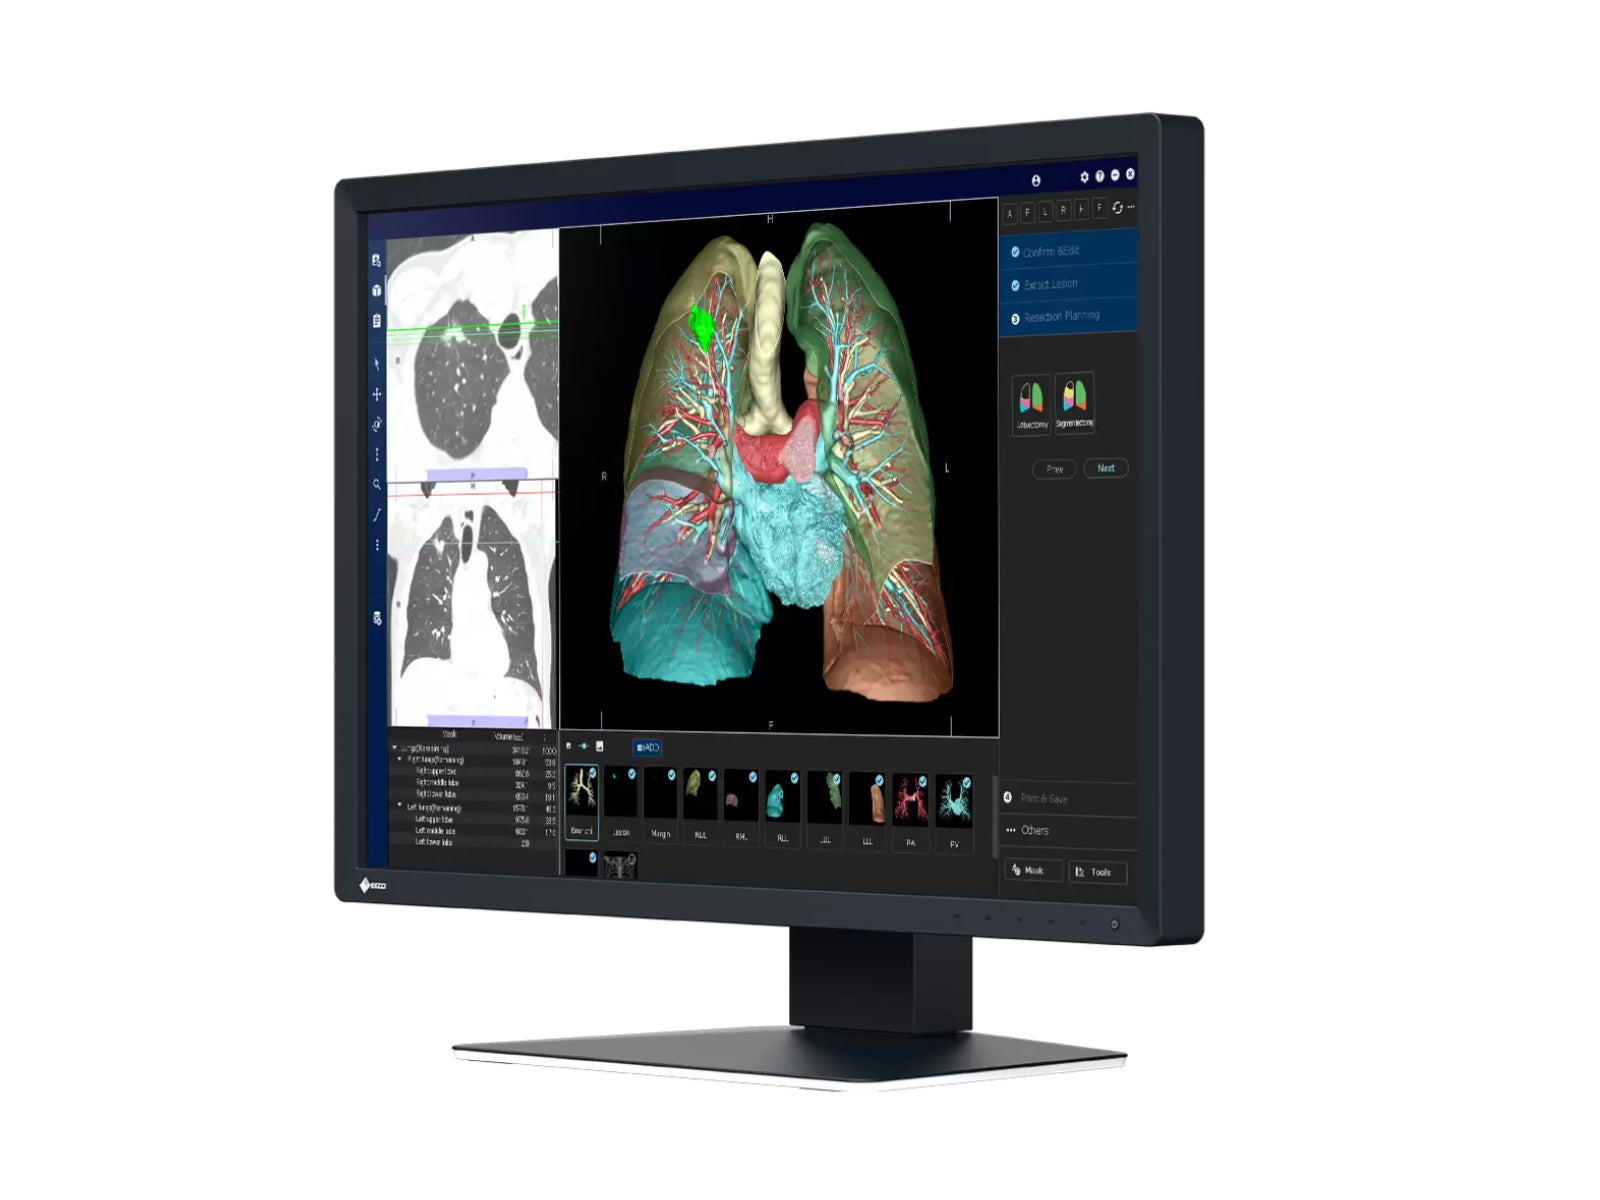 Eizo RadiForce MX243W 2.3MP 24" Color LED Clinical Review Display (MX243W) Monitors.com 